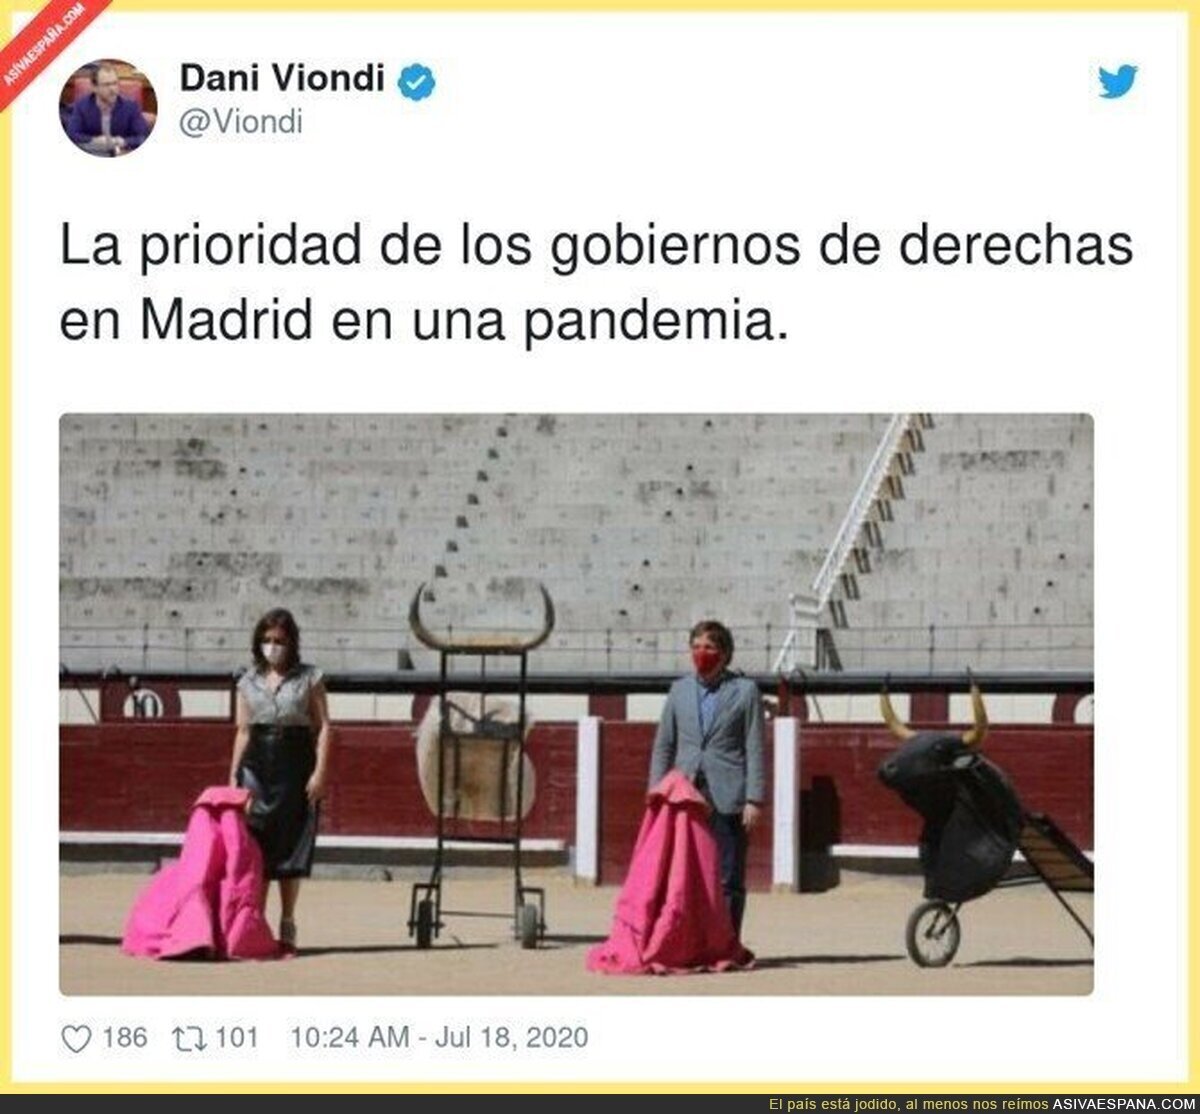 Madrid capital europea de la vergüenza ajena